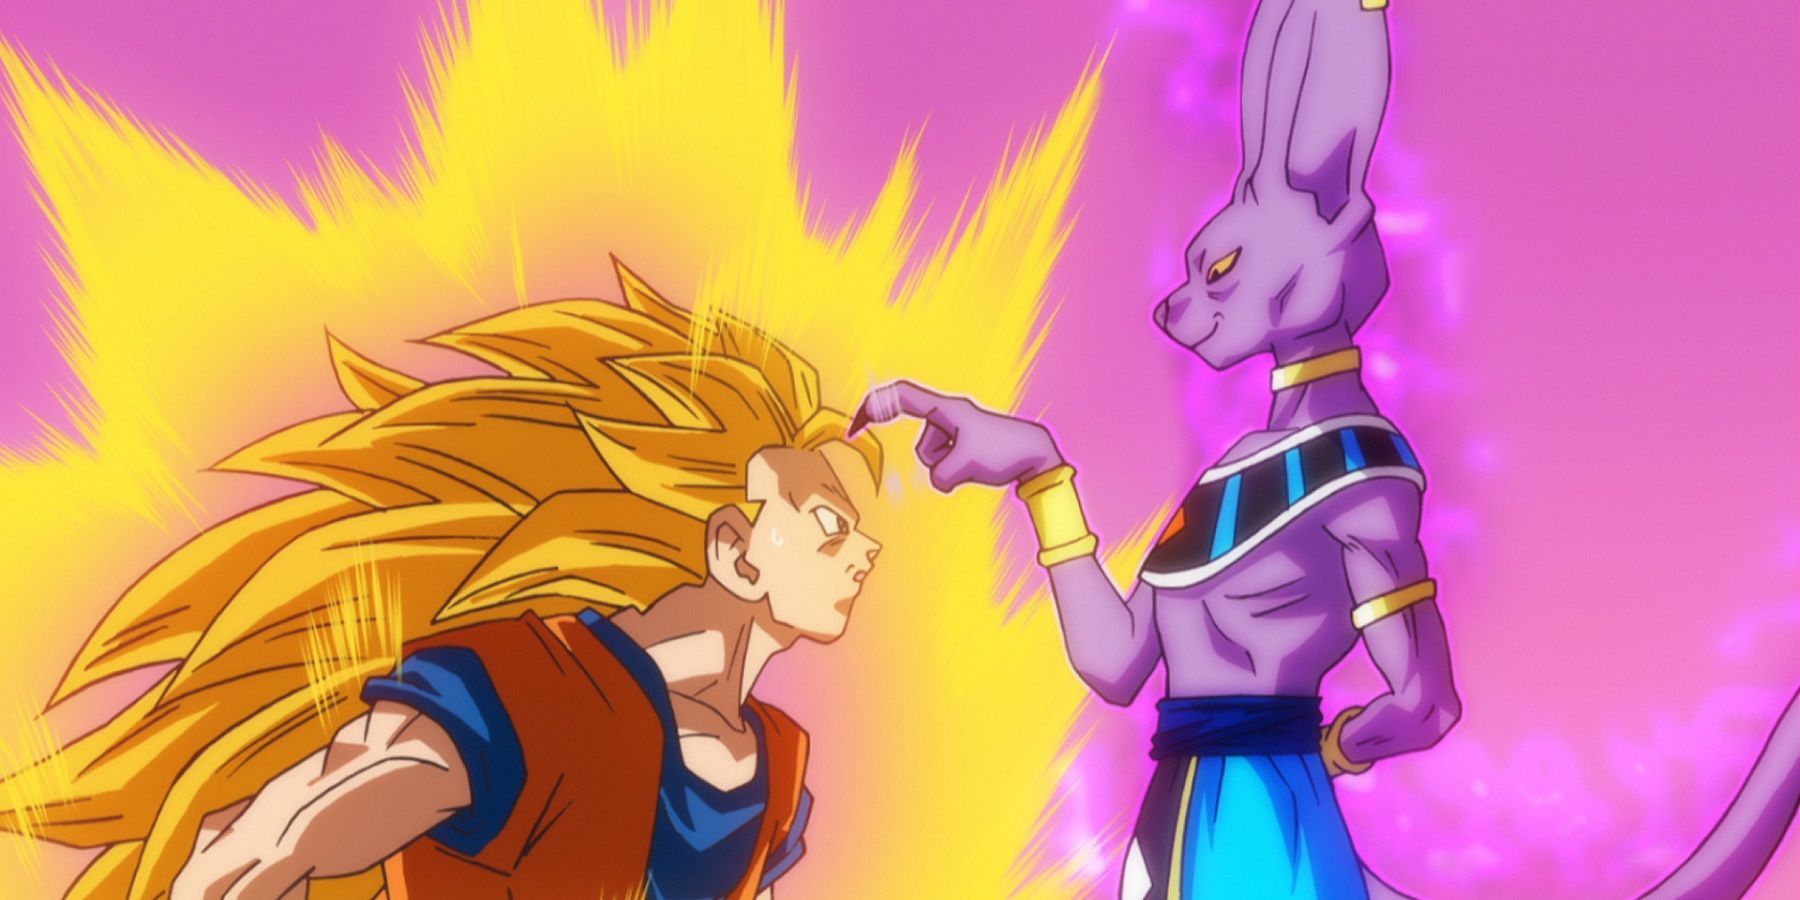 Super Saiyan 3 Goku attacks Beerus in Dragon Ball Z Battle of Gods